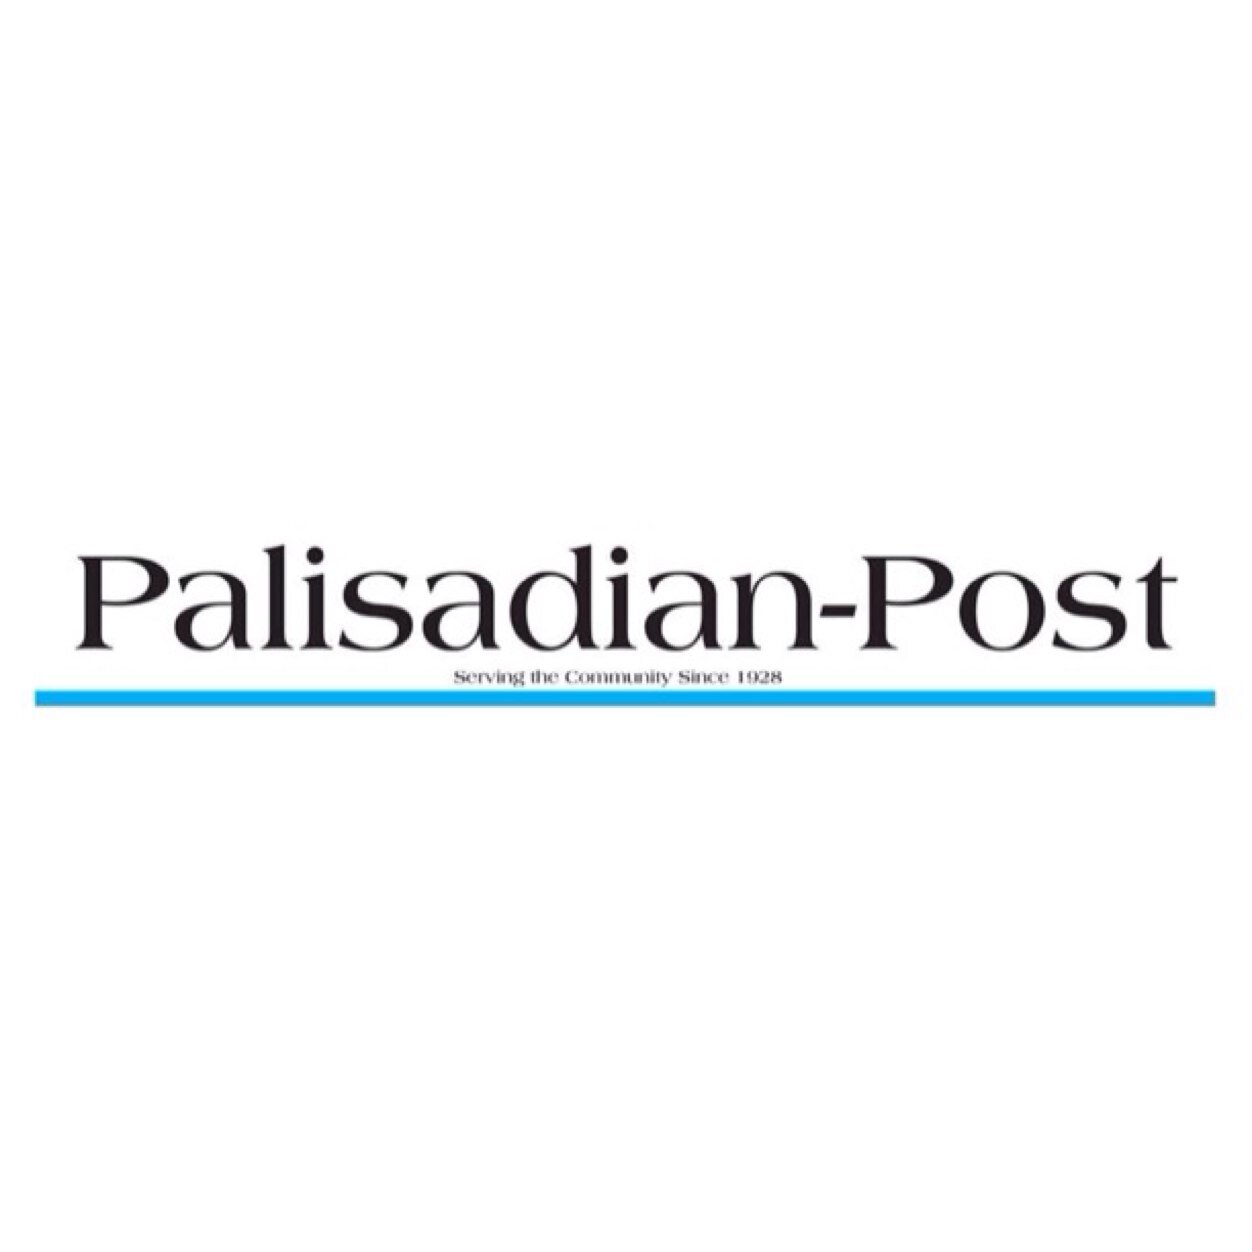 Palisadian-Post